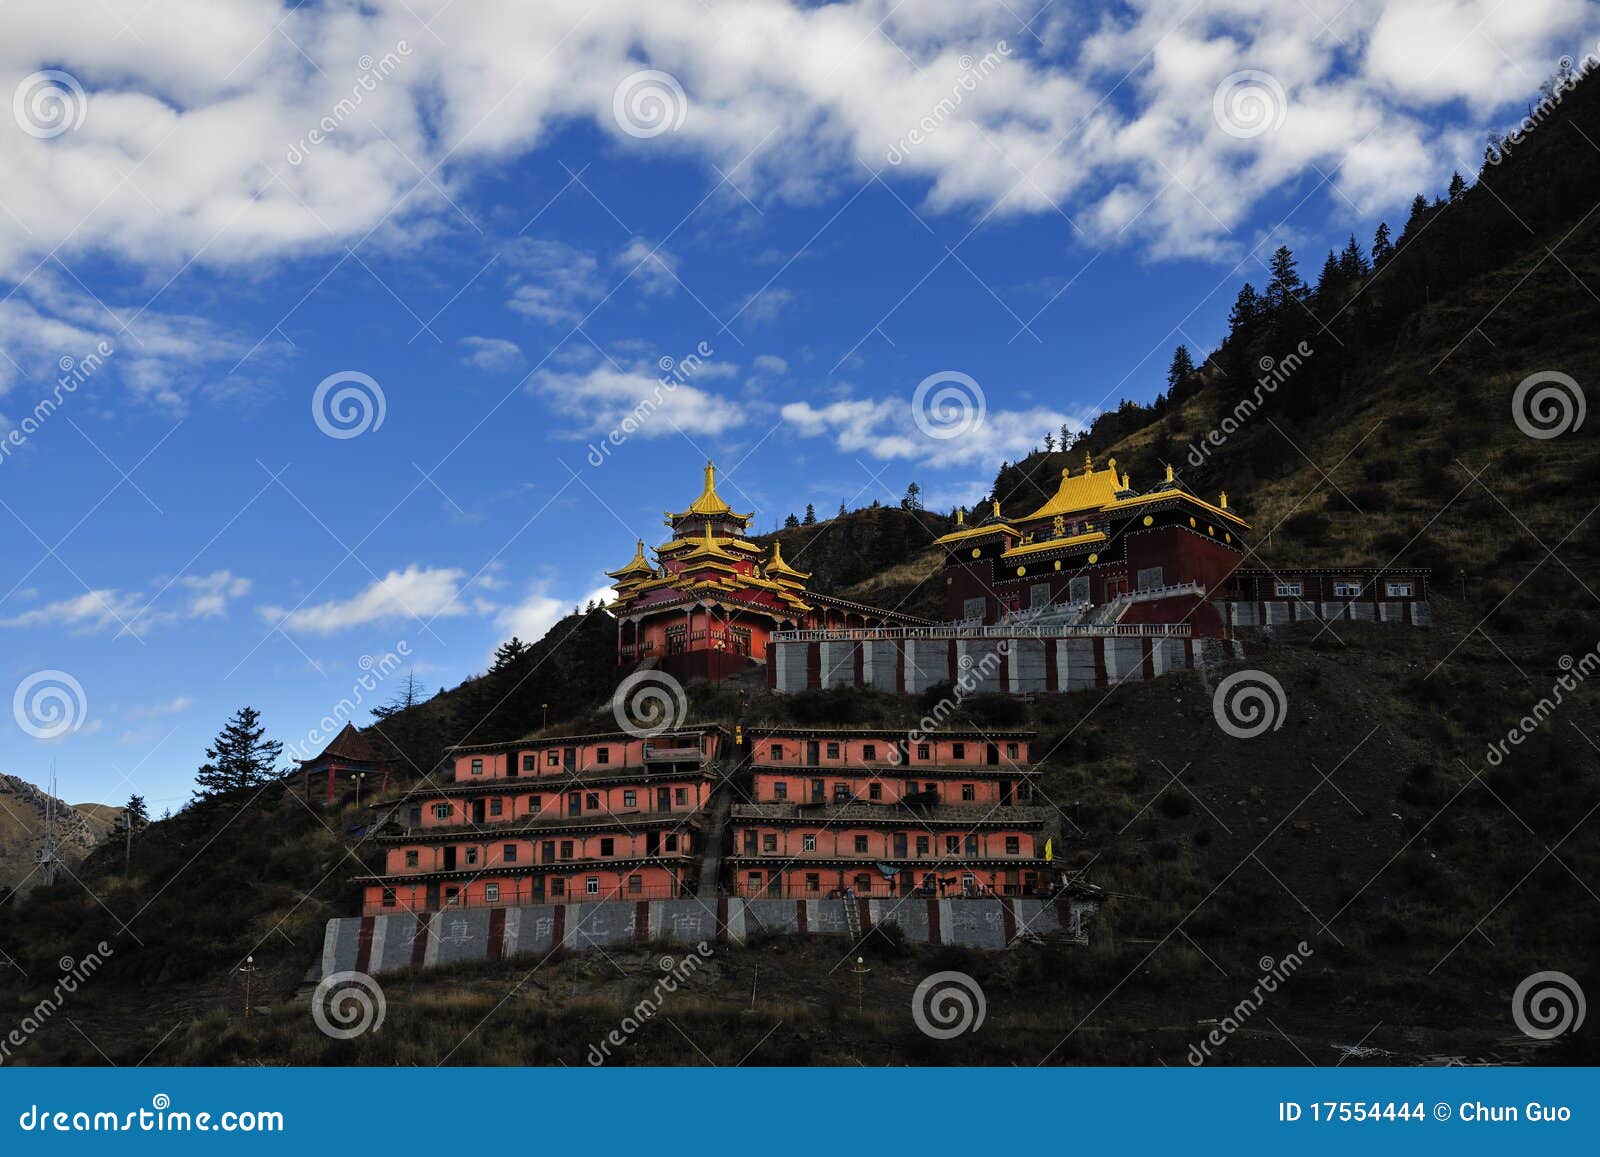 tibet- buddhism academy